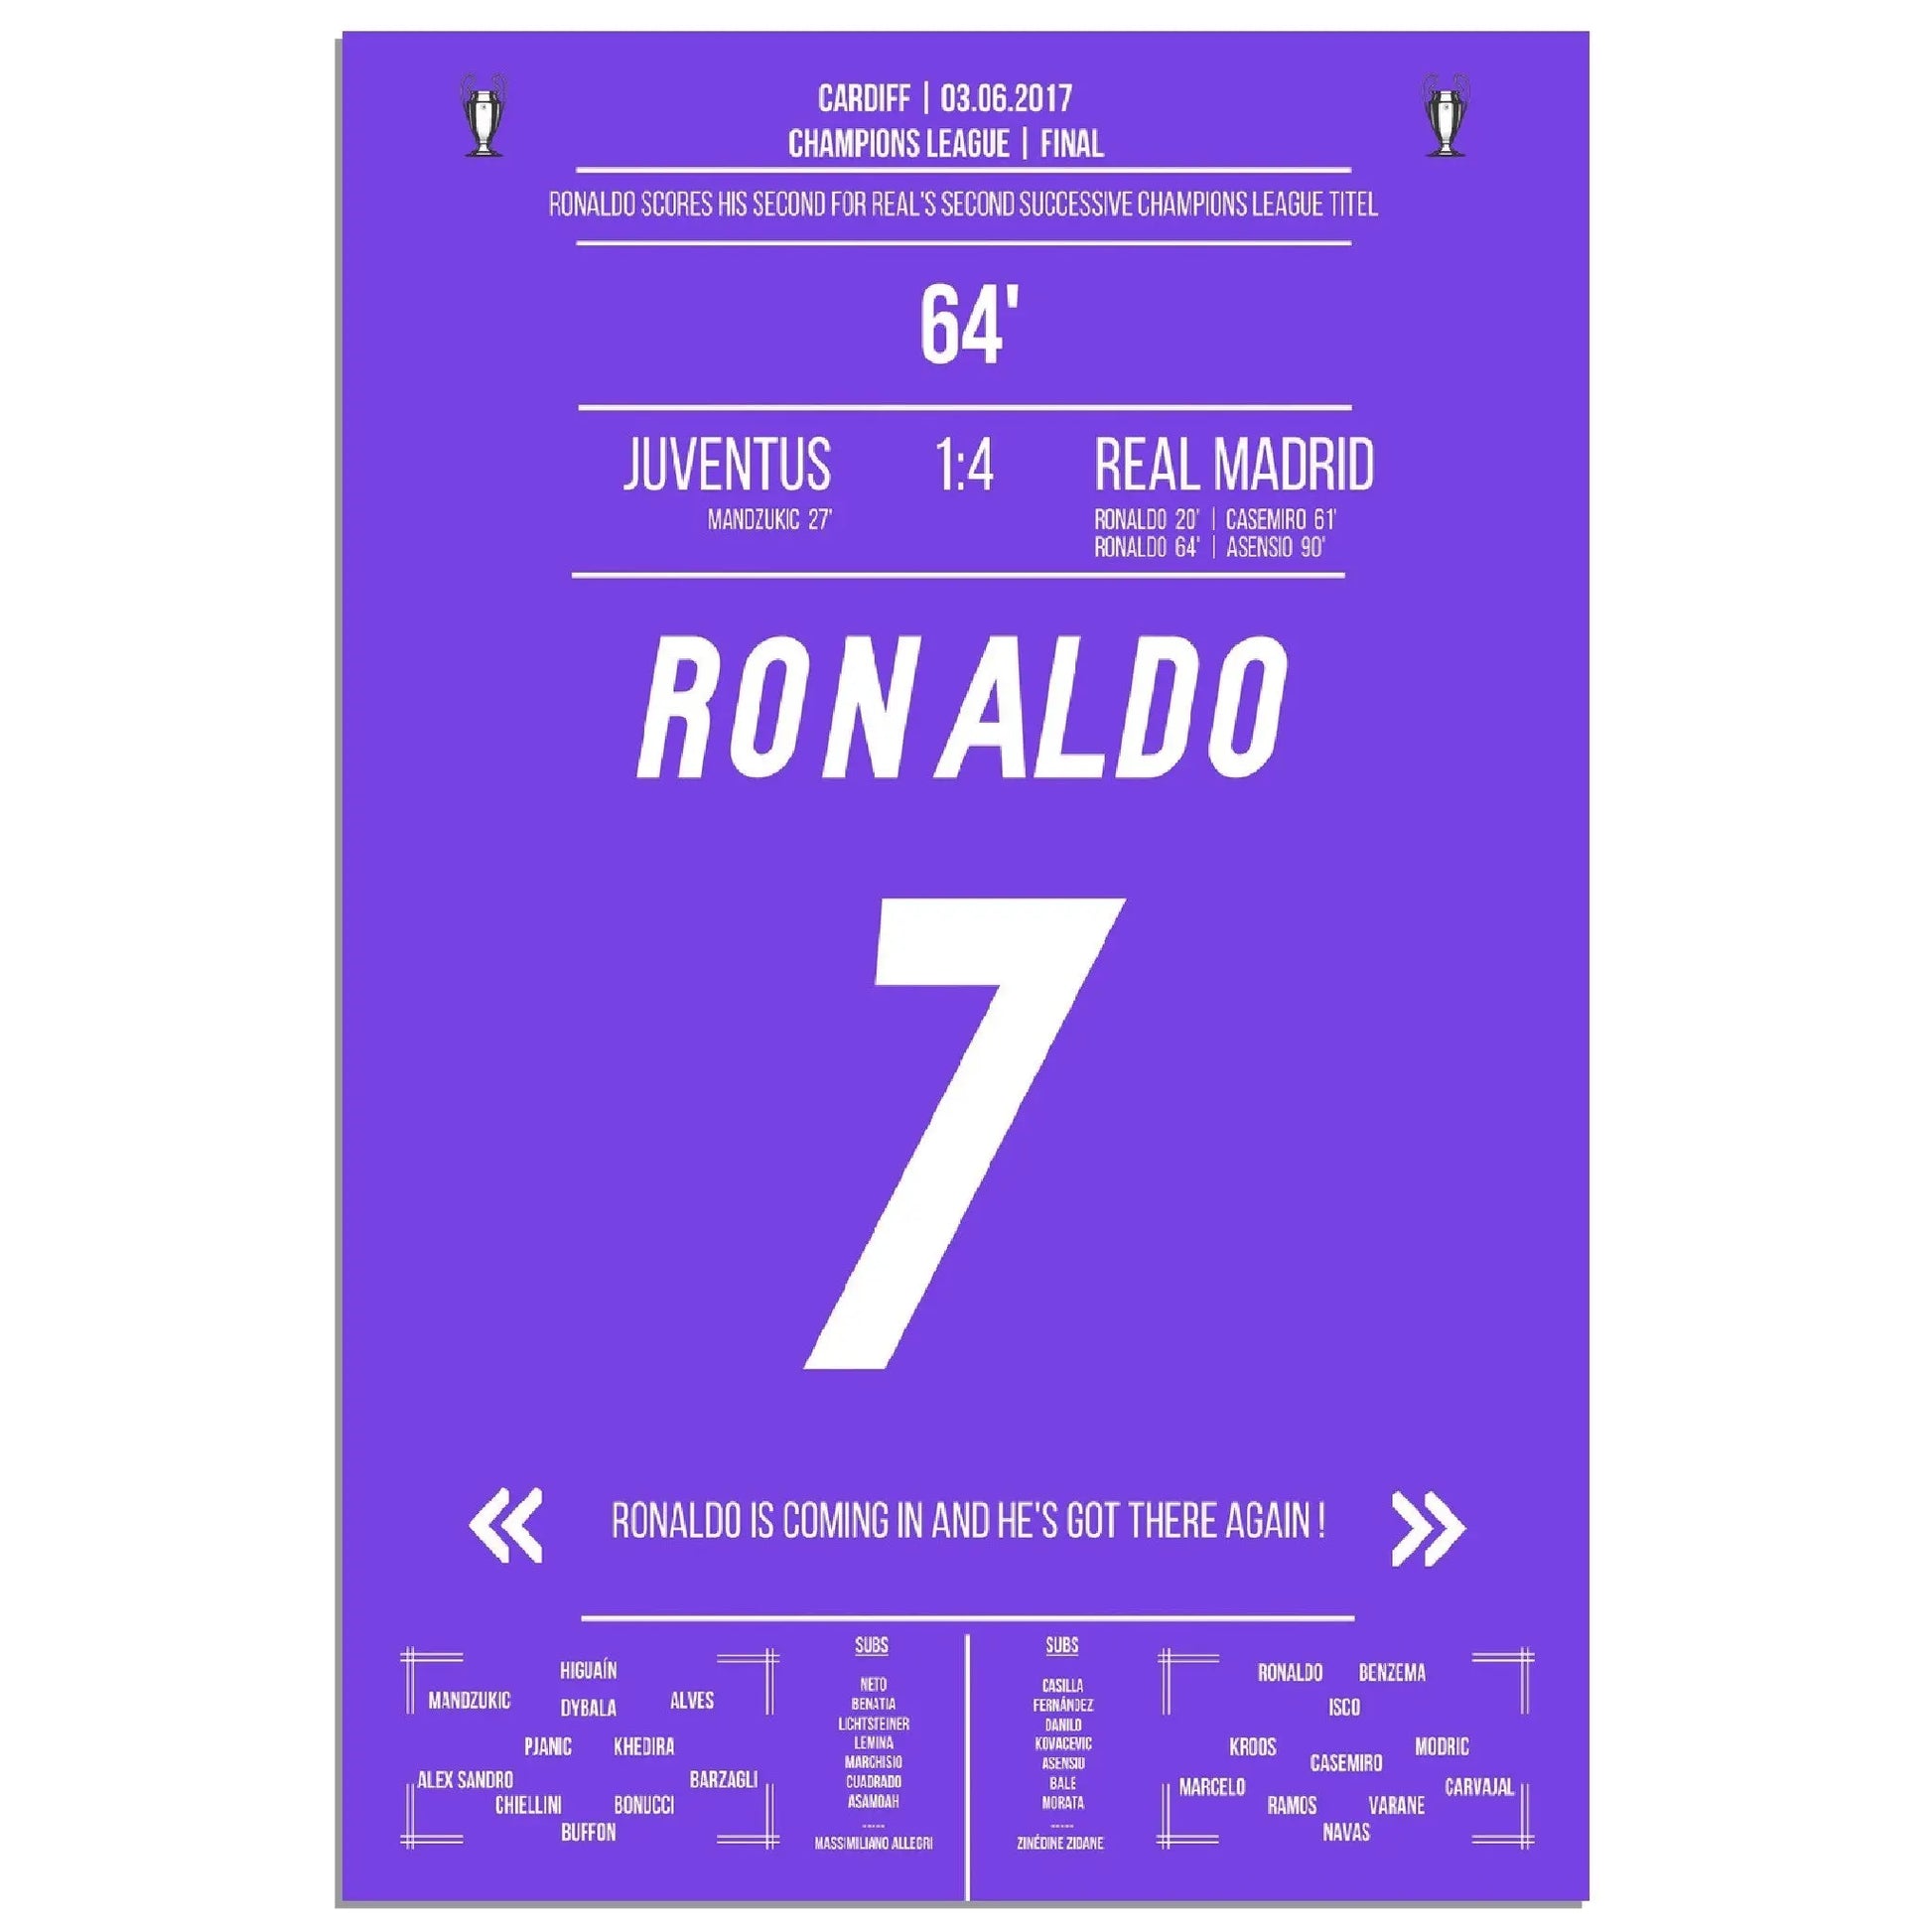 Ronaldo trifft bei Kantersieg im Champions League Finale gegen Juventus in 2017 